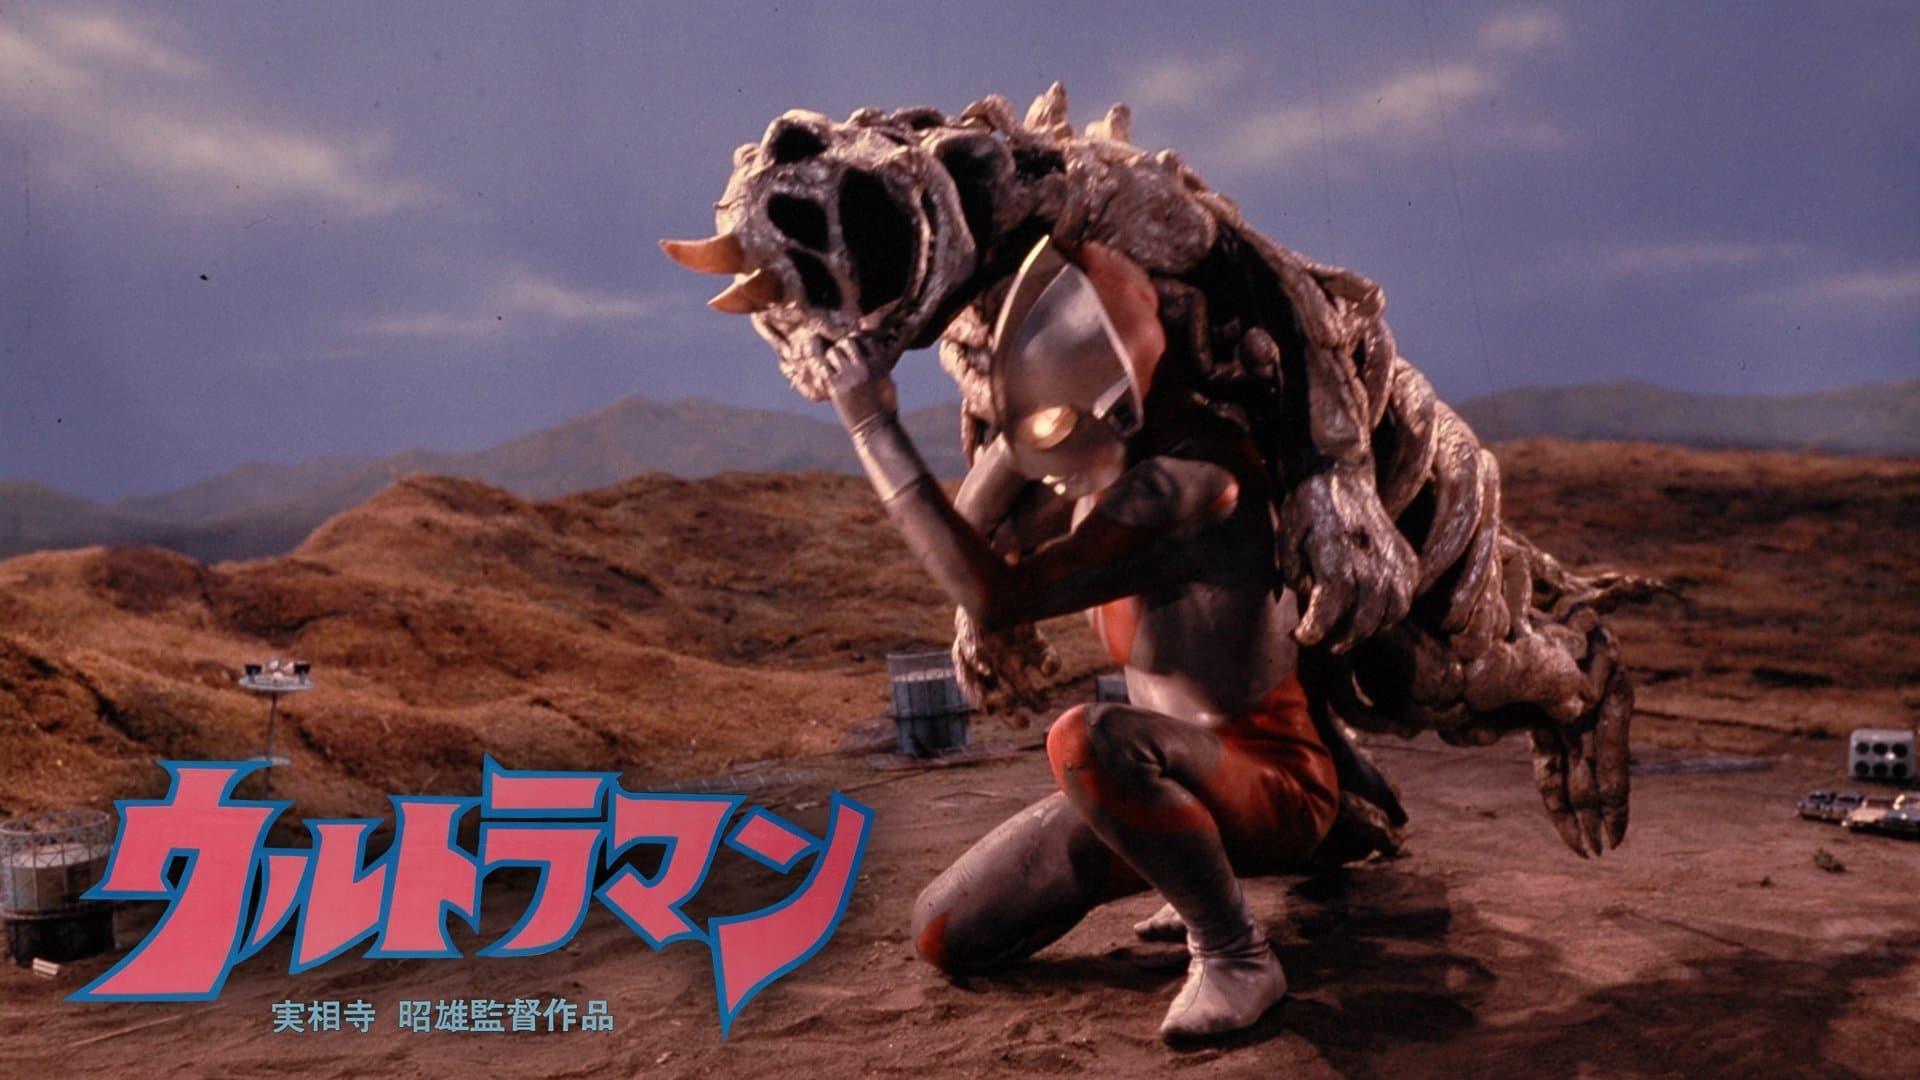 Akio Jissoji's Ultraman backdrop